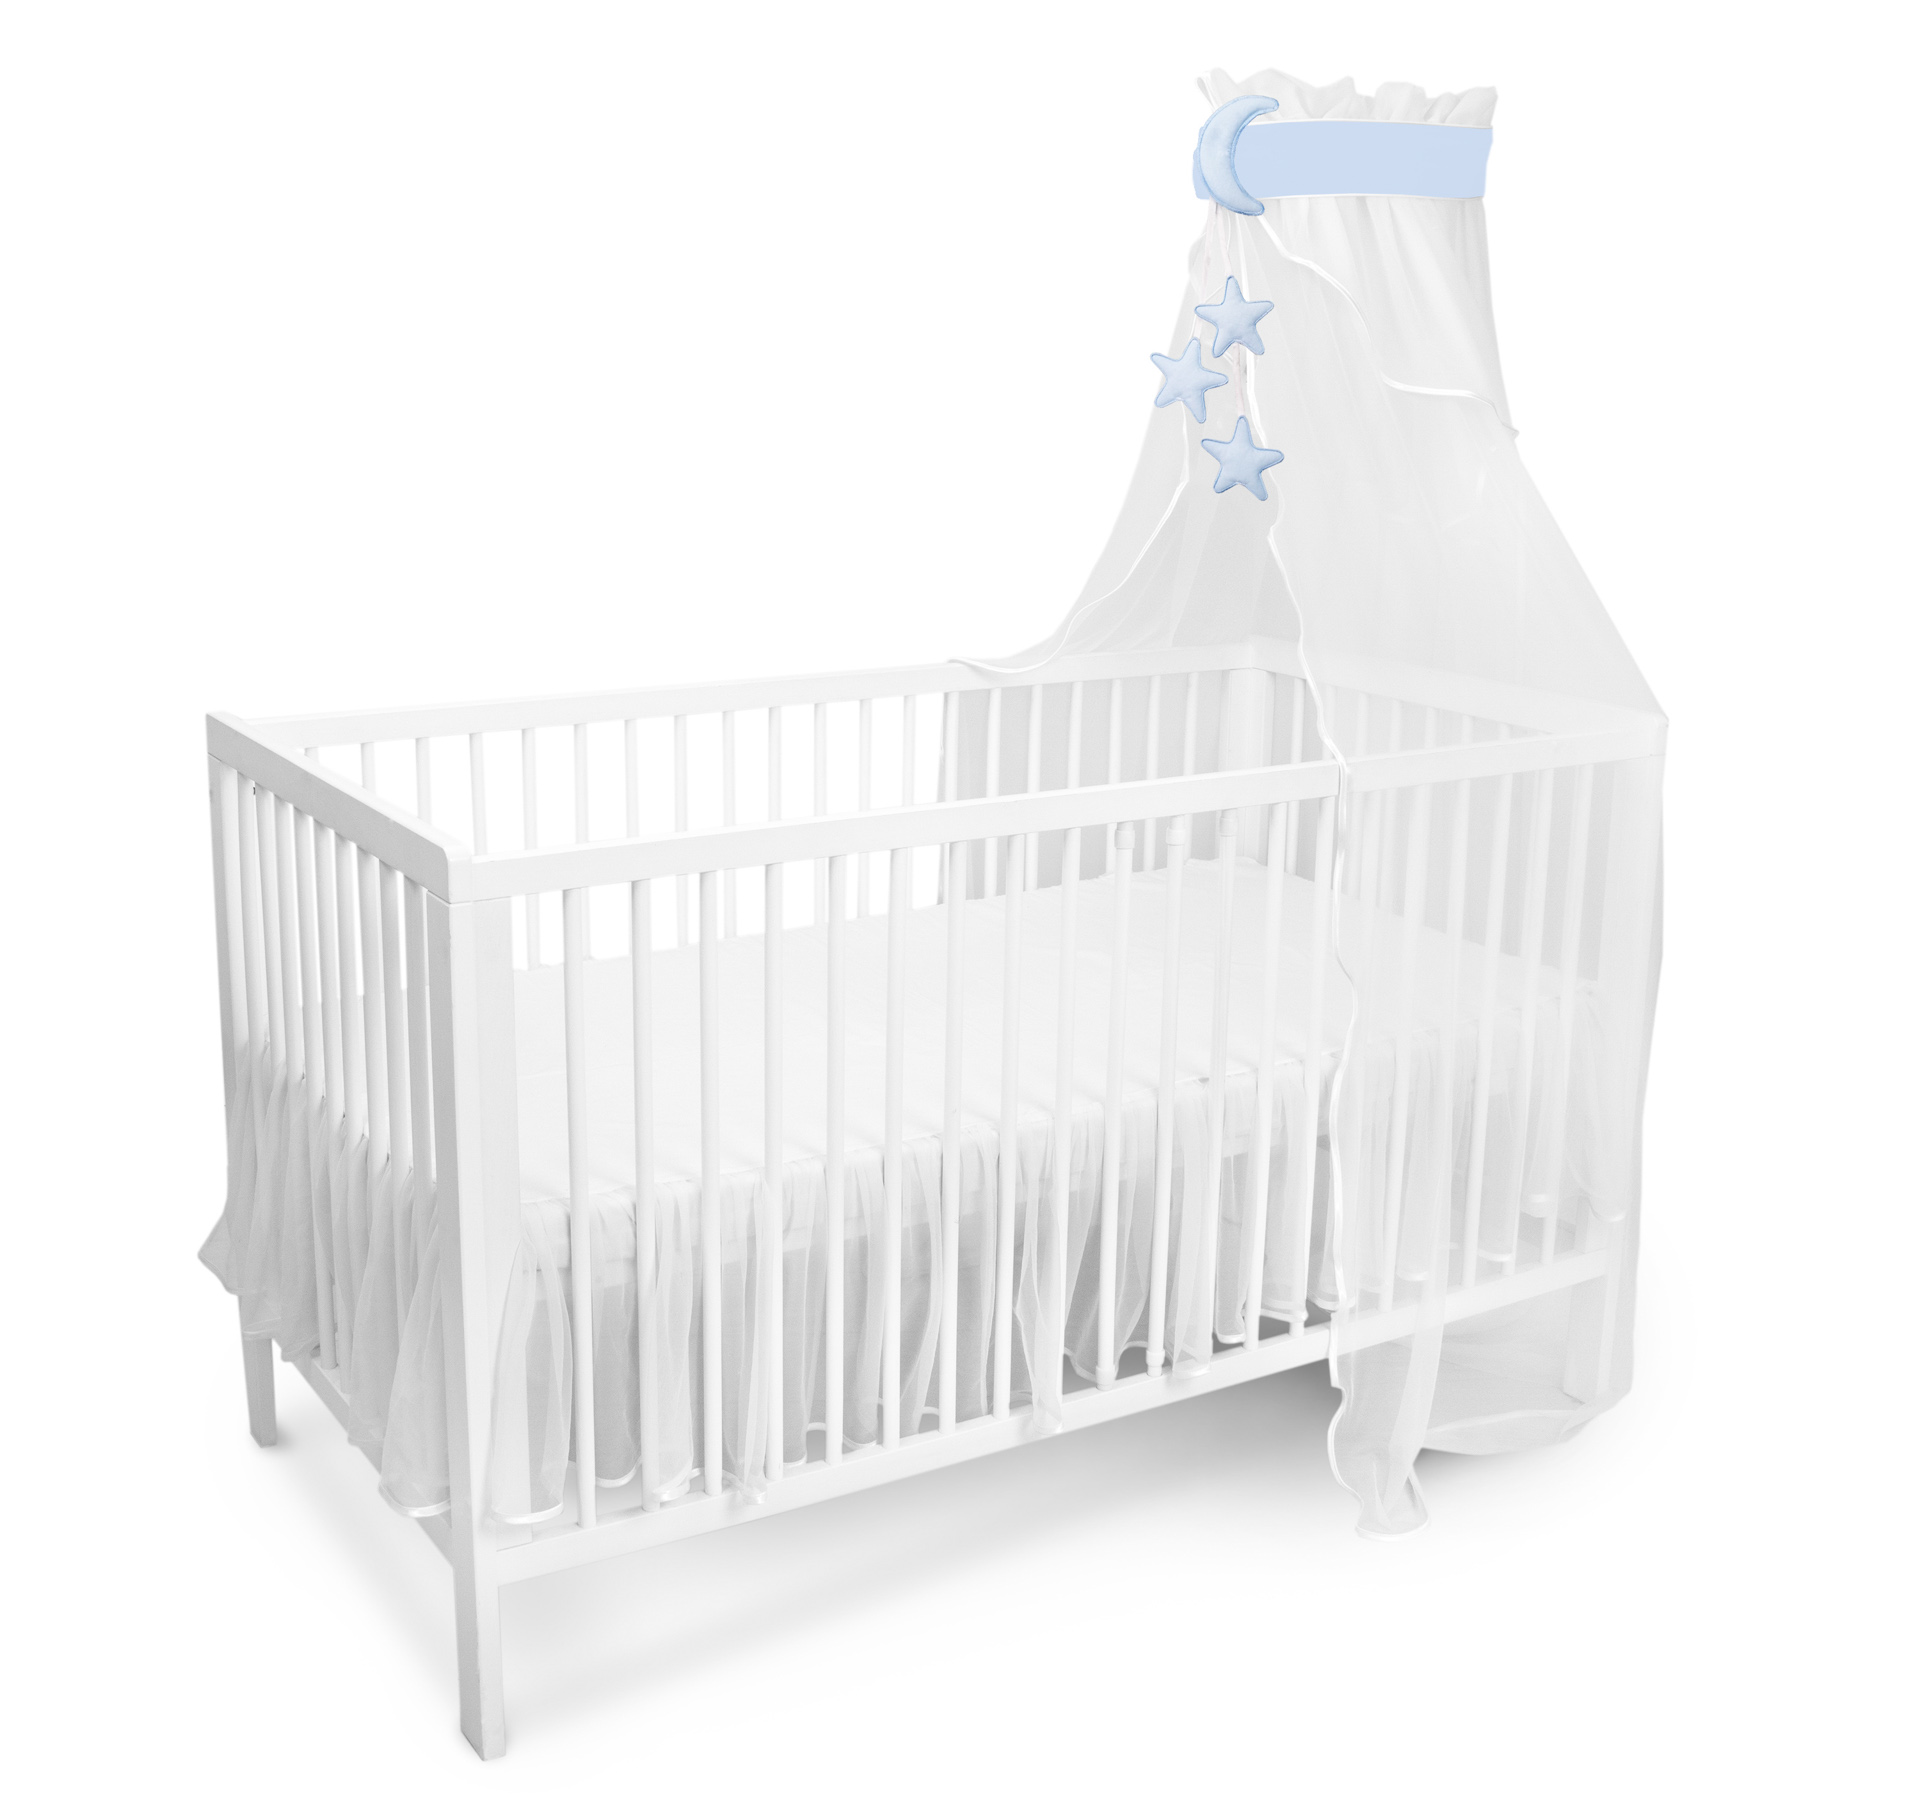 Himmelstange für Baby Himmelhalter Kinderbett Stubenwagen Wiege Bett Babybett 